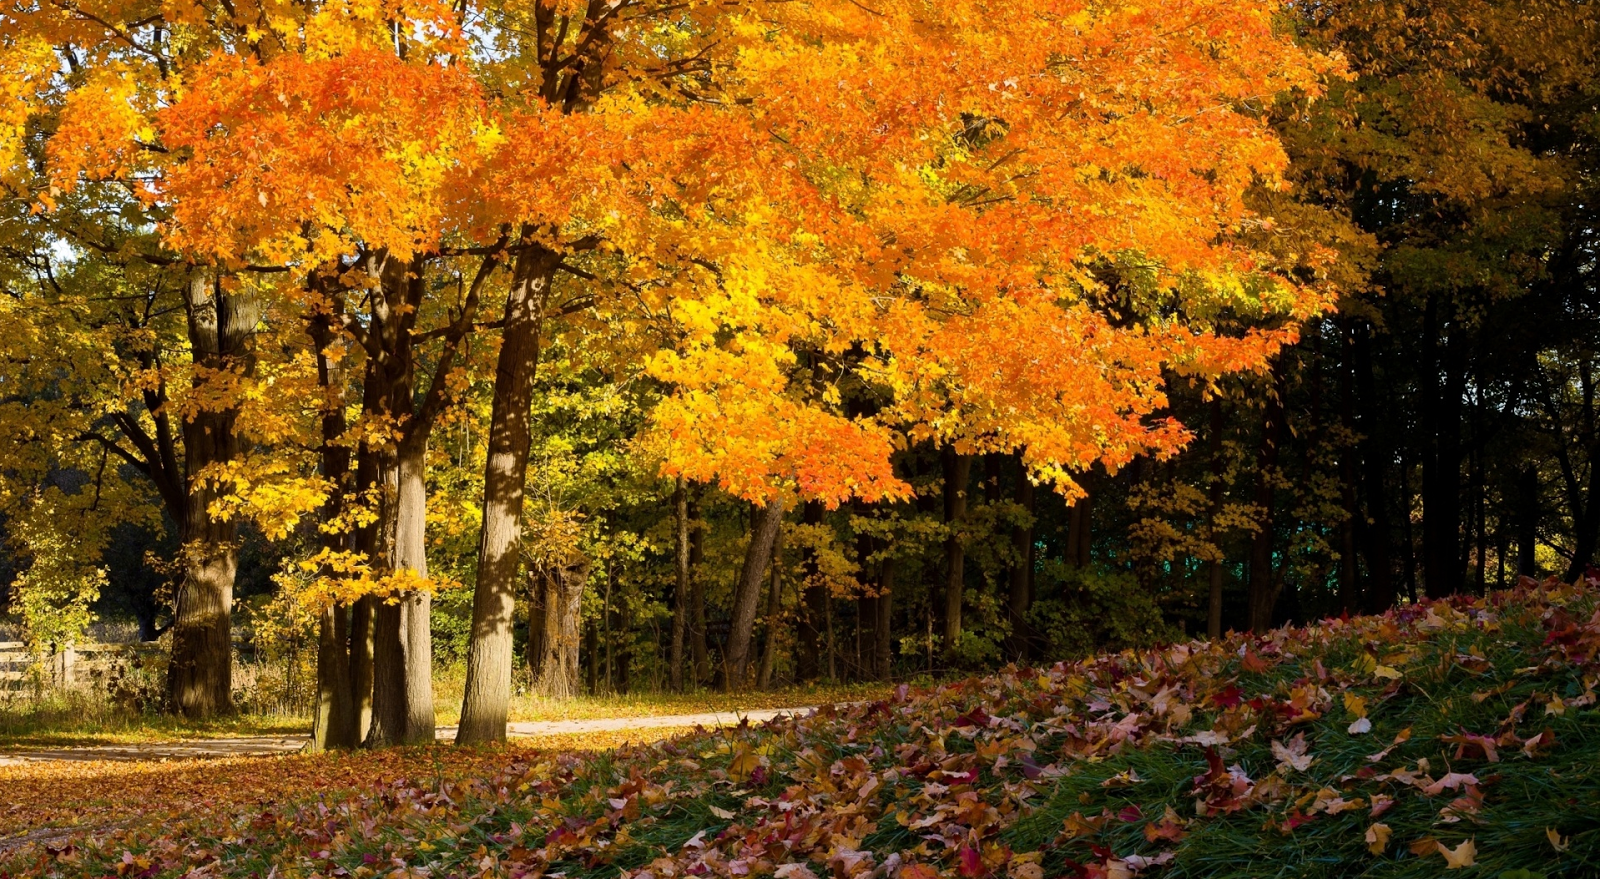 HD Wallpaper Pic Blog is the best blog for downloading free Autumn Beautiful Forest desktop wallpaper in high resolut. Autumn landscape, Landscape, Autumn scenes